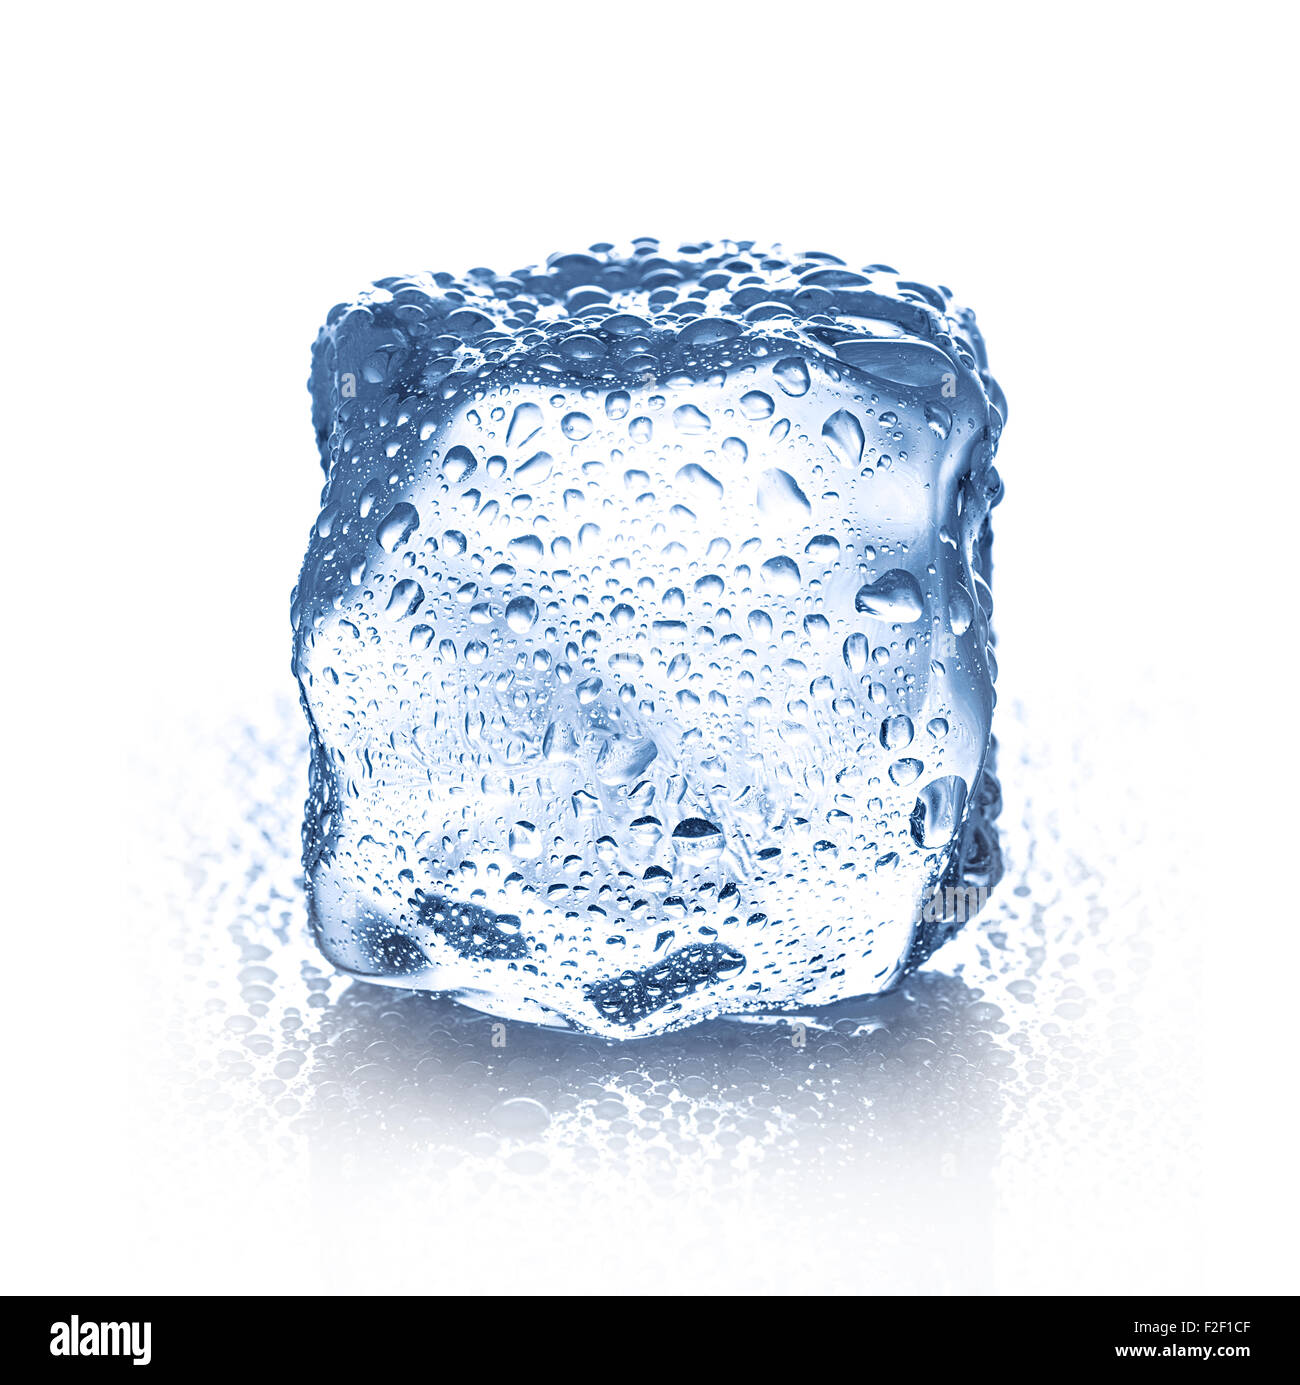 Cubo de hielo con gotas de agua cercano aislado sobre un fondo blanco. Foto de stock